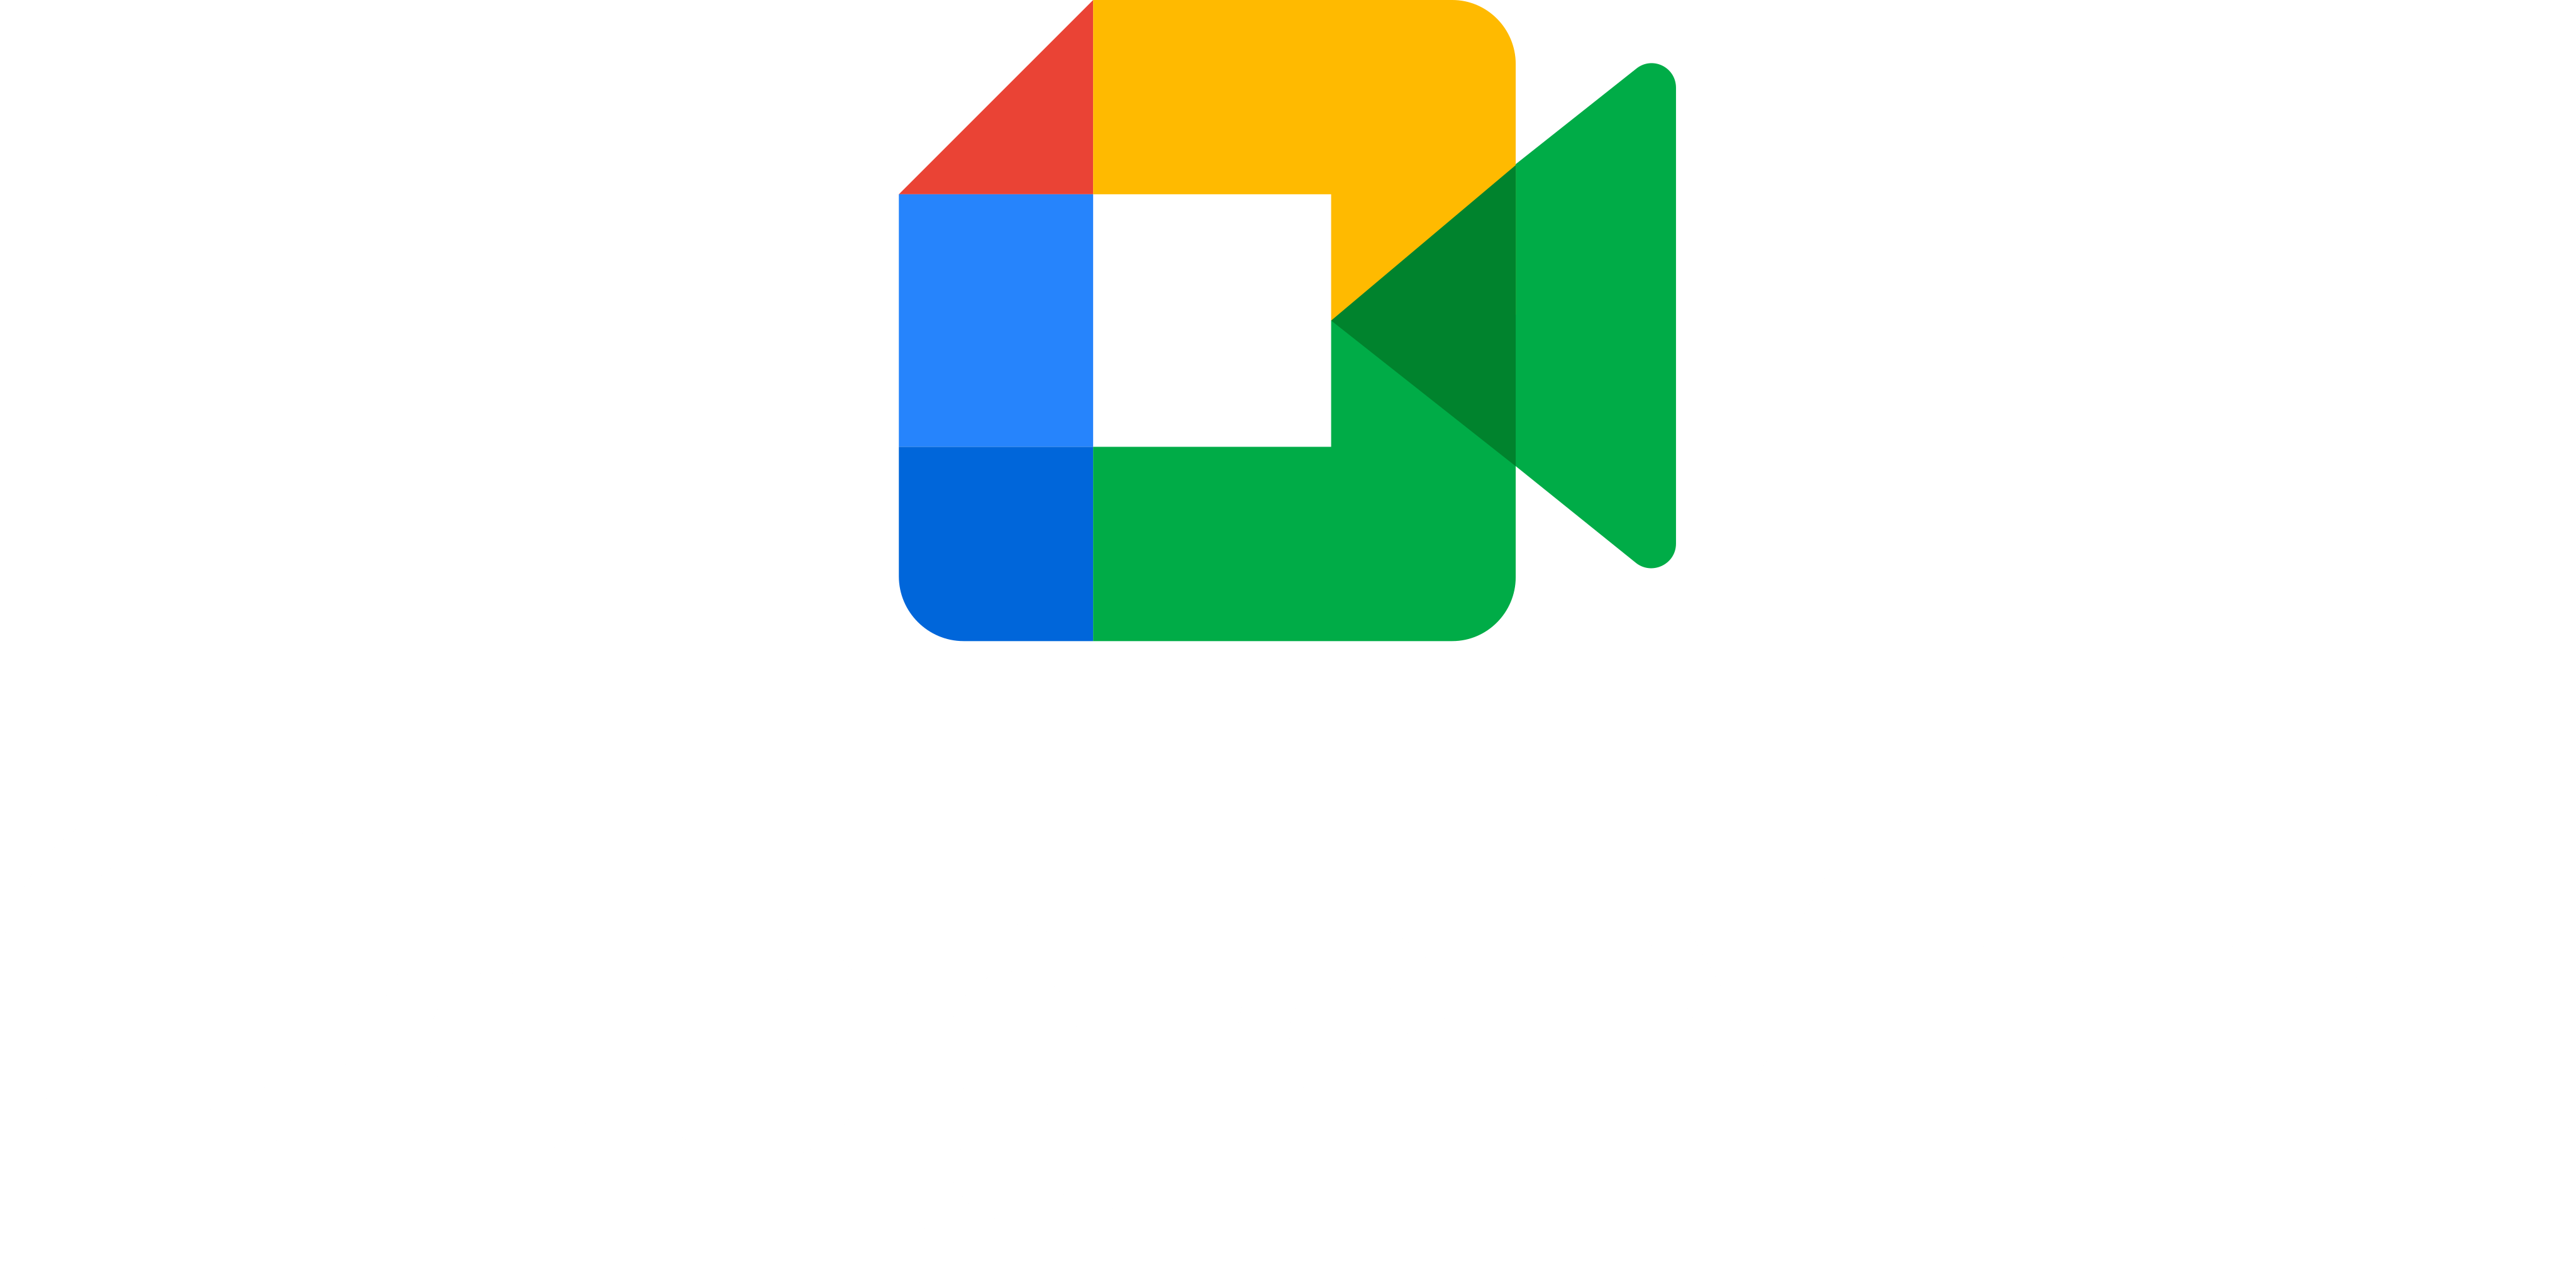 google meet logo 1 copy 2